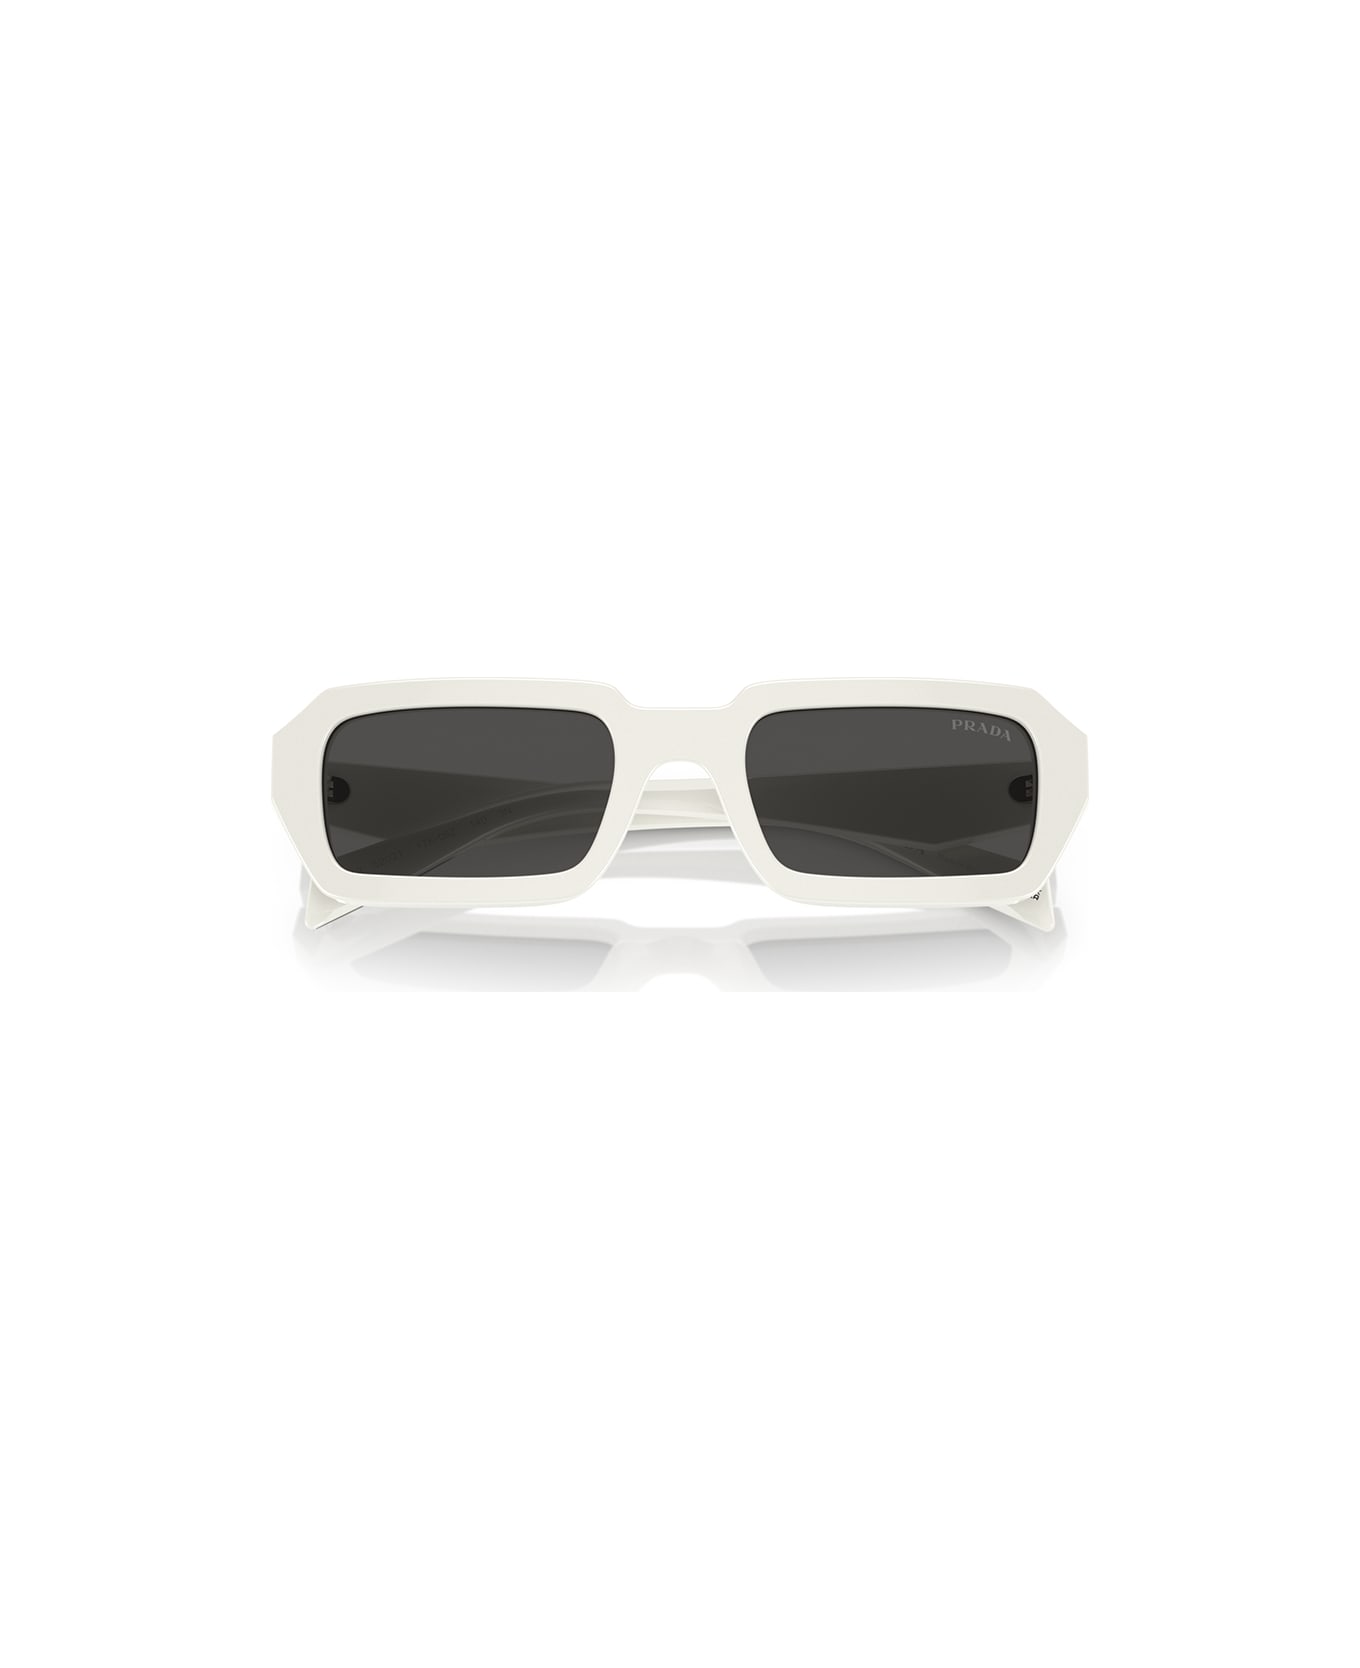 Prada Eyewear Eyewear - Bianco/Grigio アイウェア